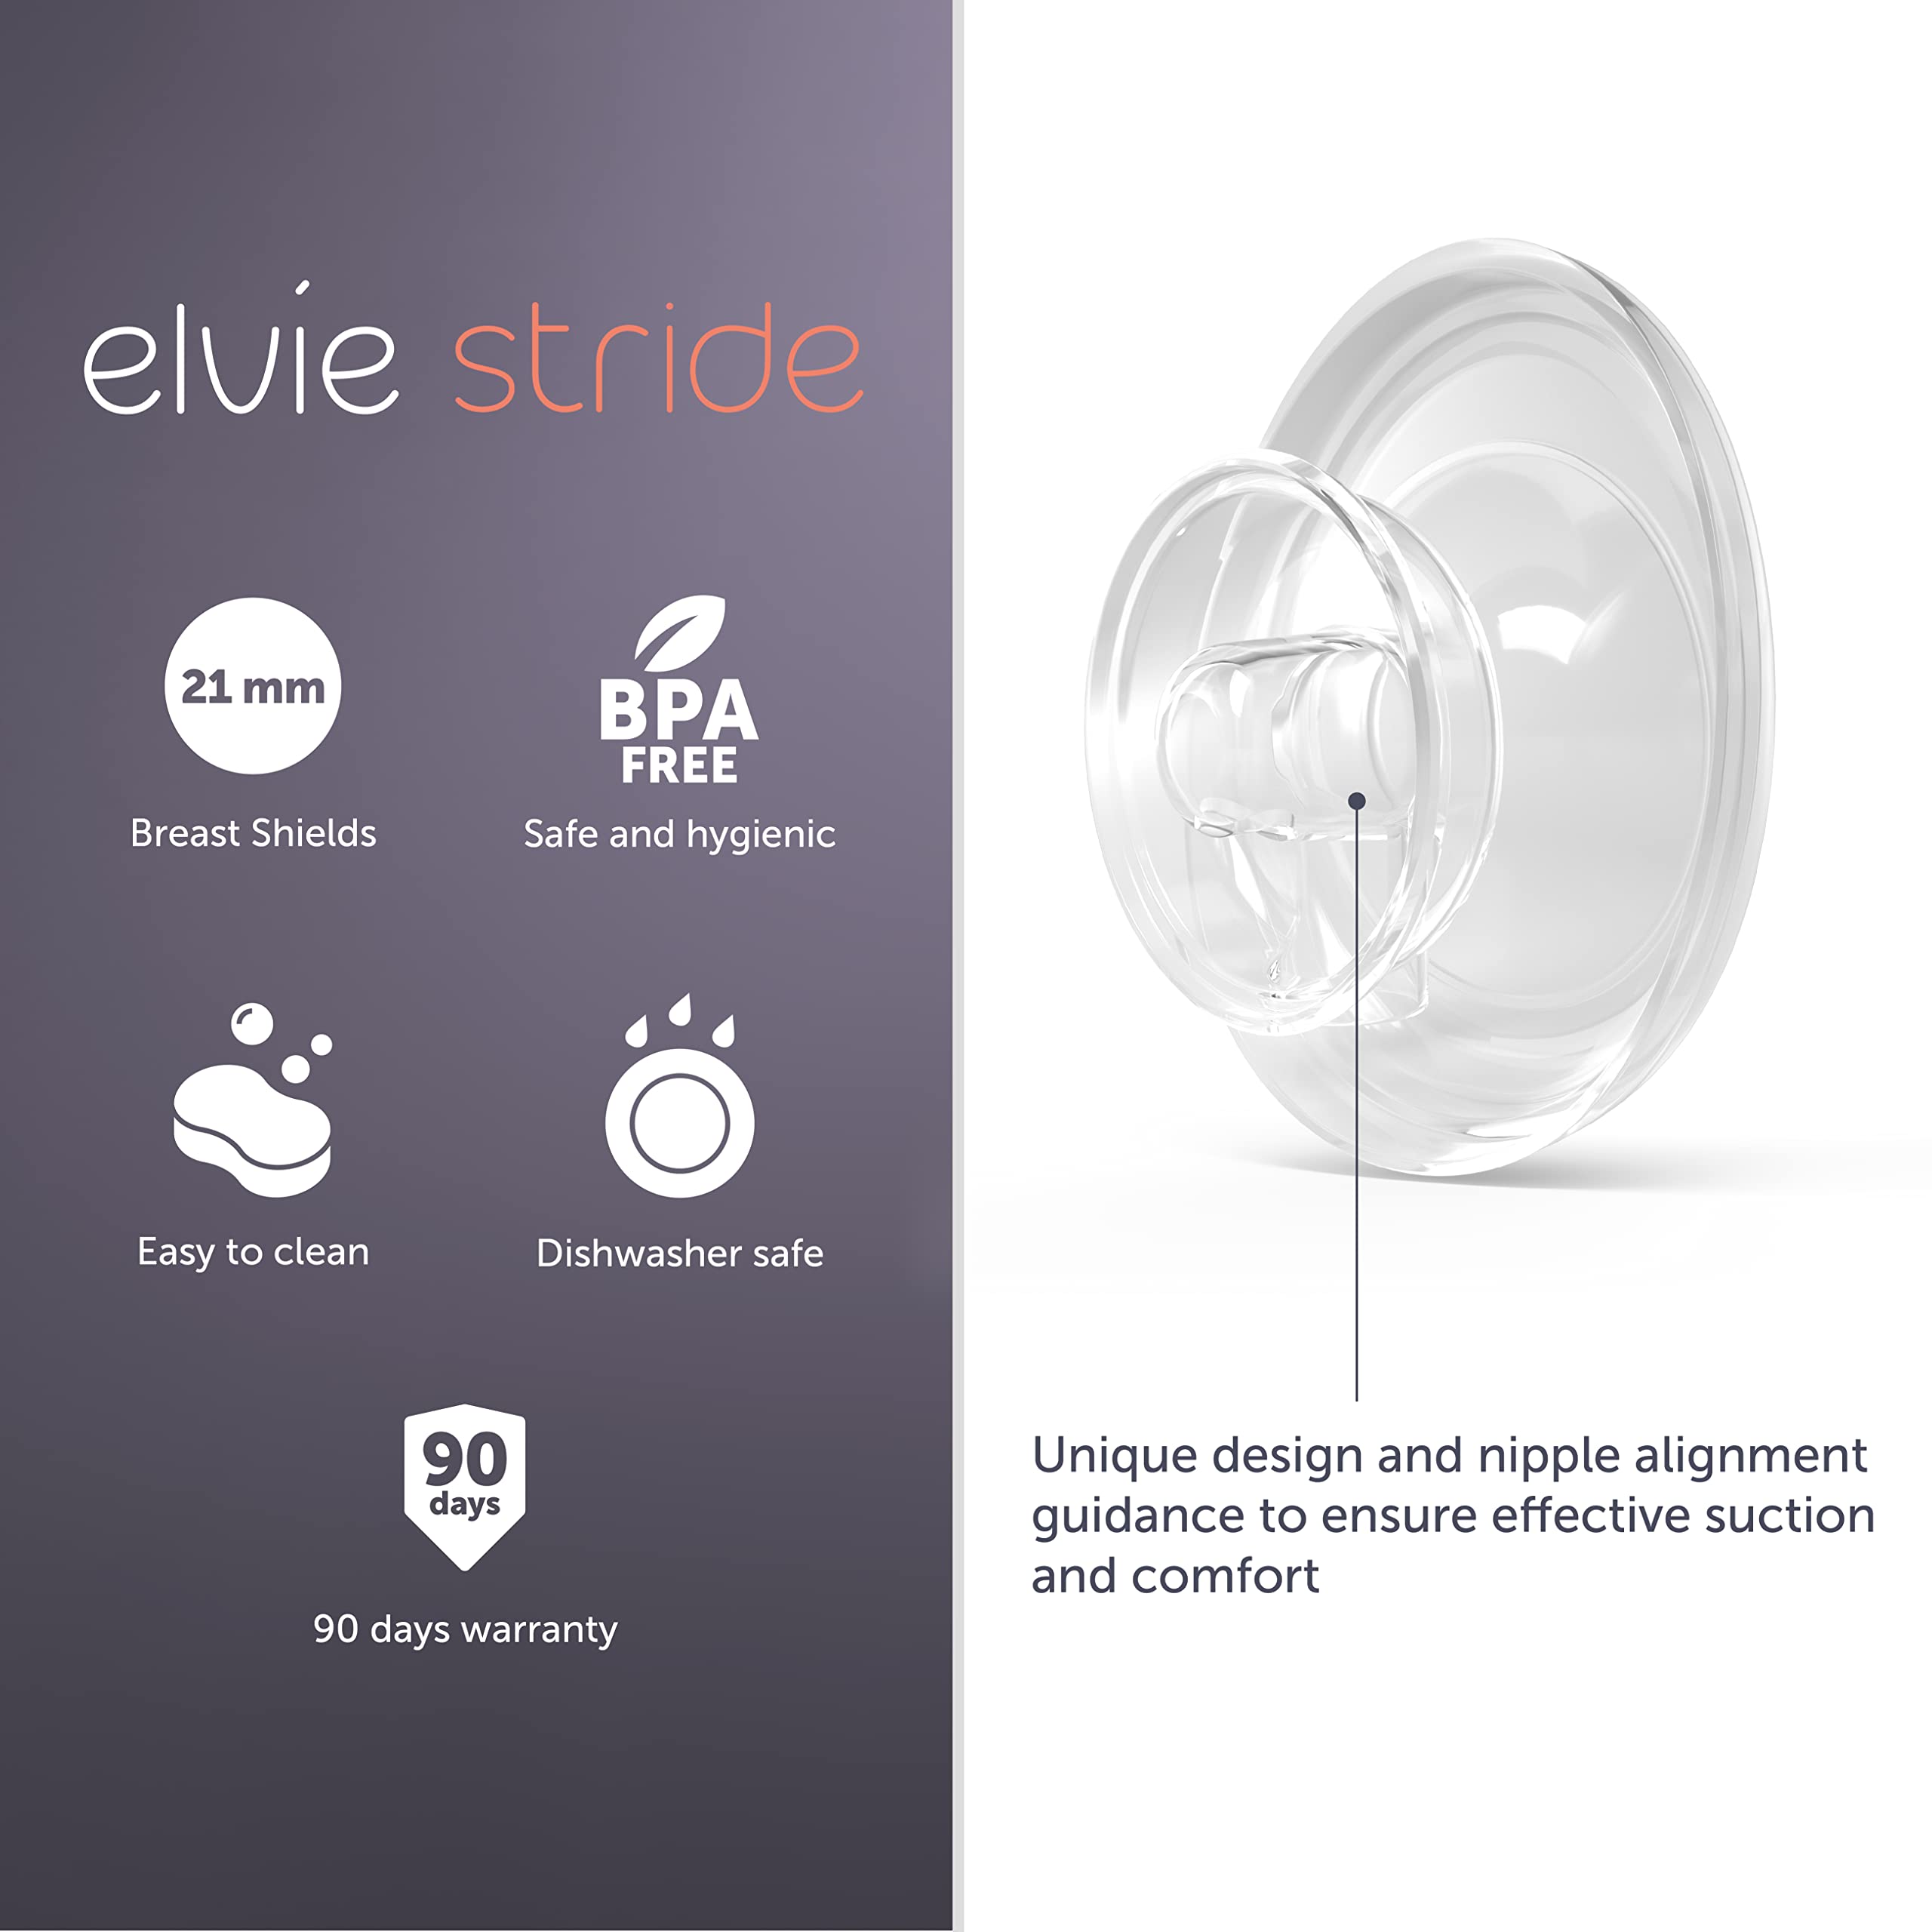 Elvie Stride Breast Pump Breast Shield - 21mm | 2 Pack | Nipple Shield Flange for Pumping Breast Milk | Breastfeeding Essentials for Electric Breast Pumps | BPA Free, Dishwasher Safe